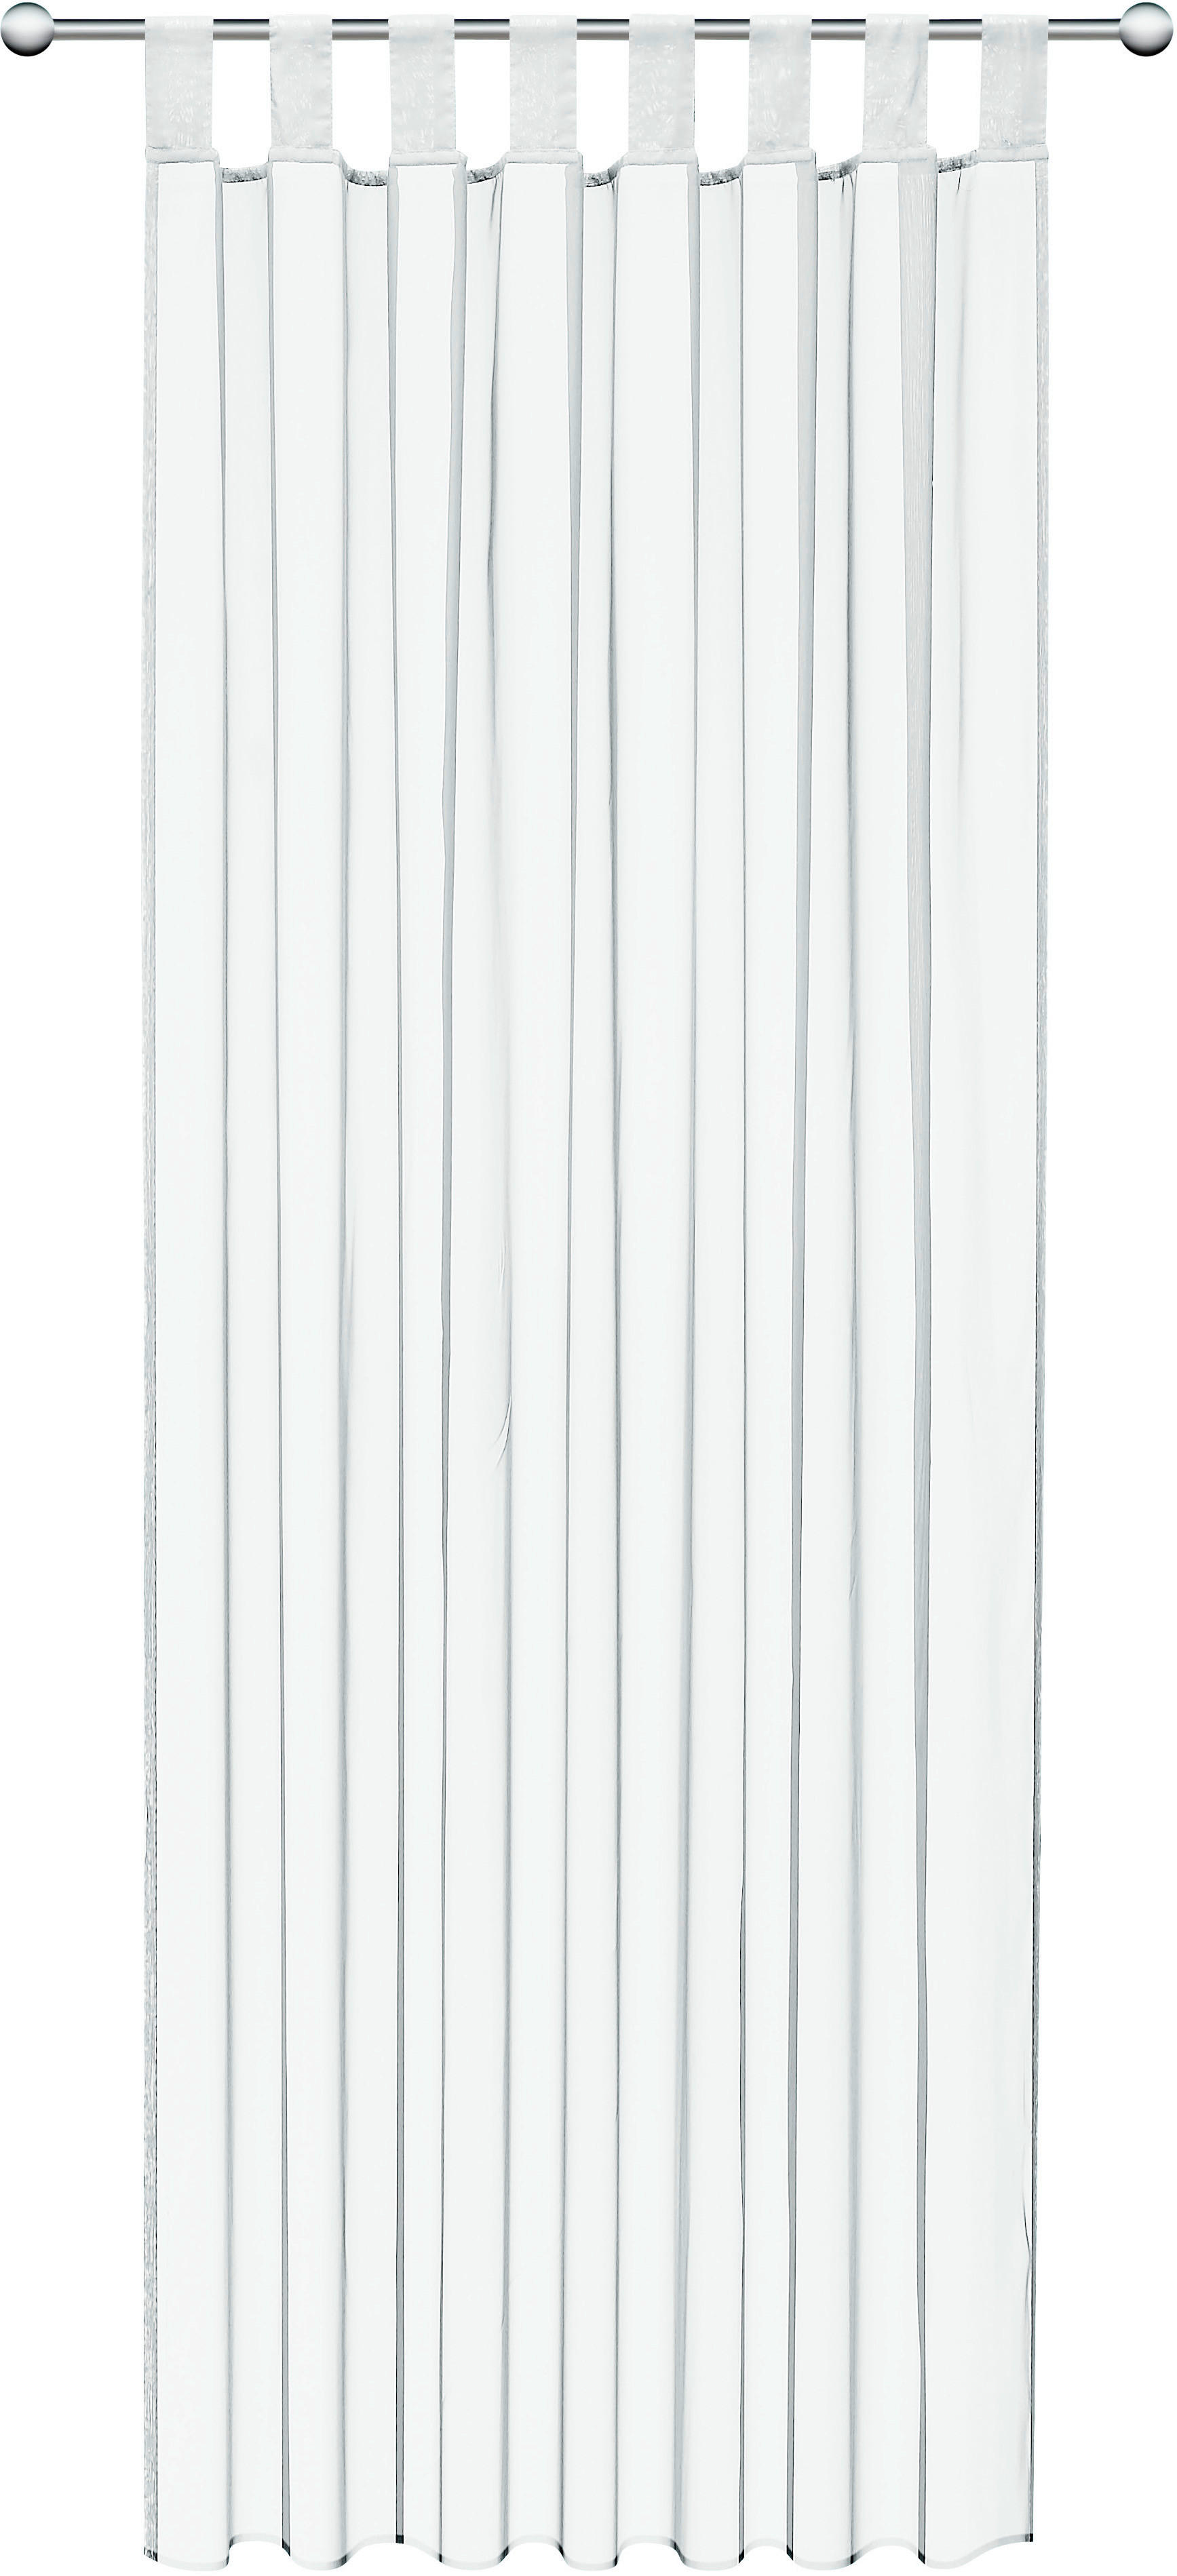 SCHLAUFENVORHANG transparent  - weiss, Basics, Textil (140/245cm) - Boxxx